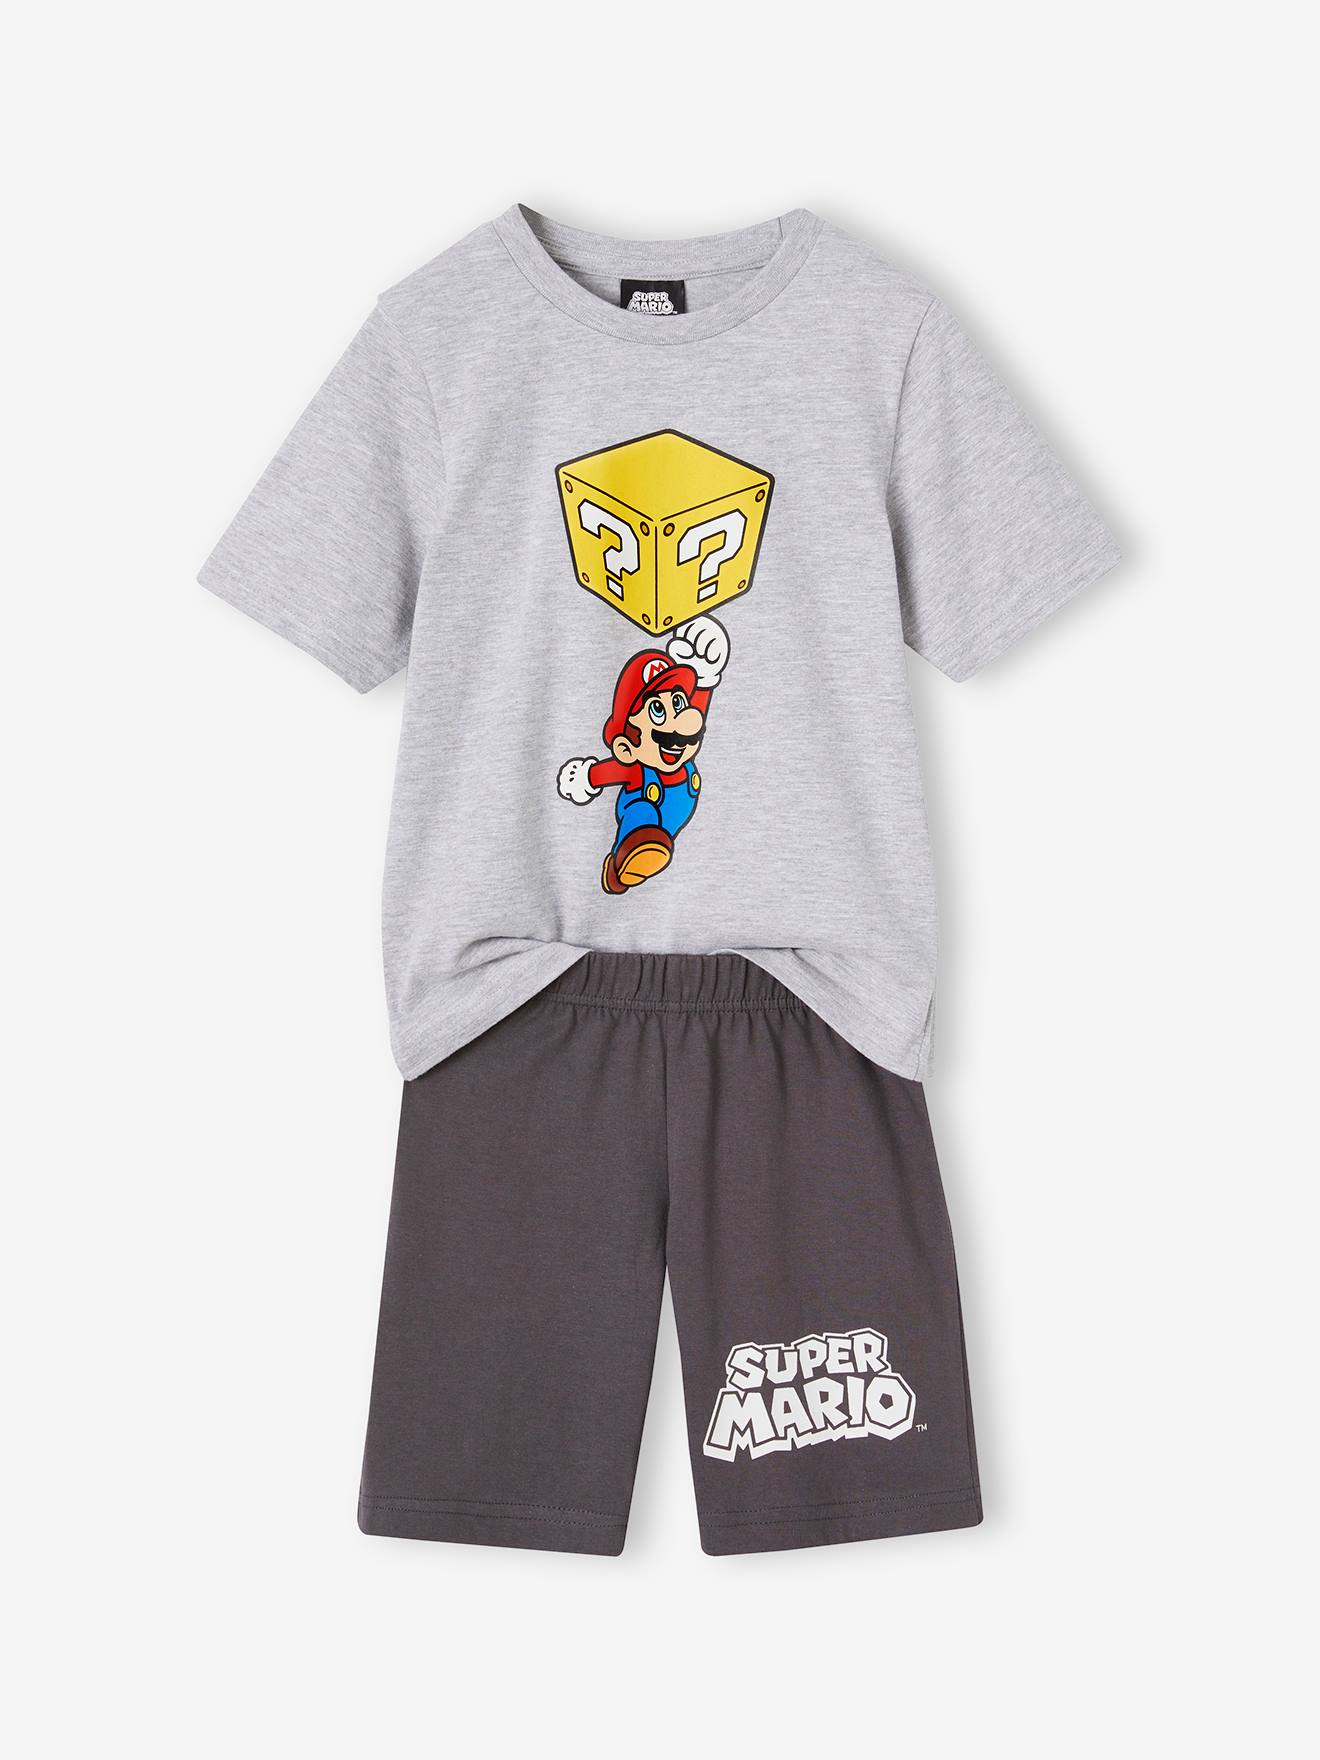 Two-Tone Super Mario(r) Short Pyjamas for Boys anthracite